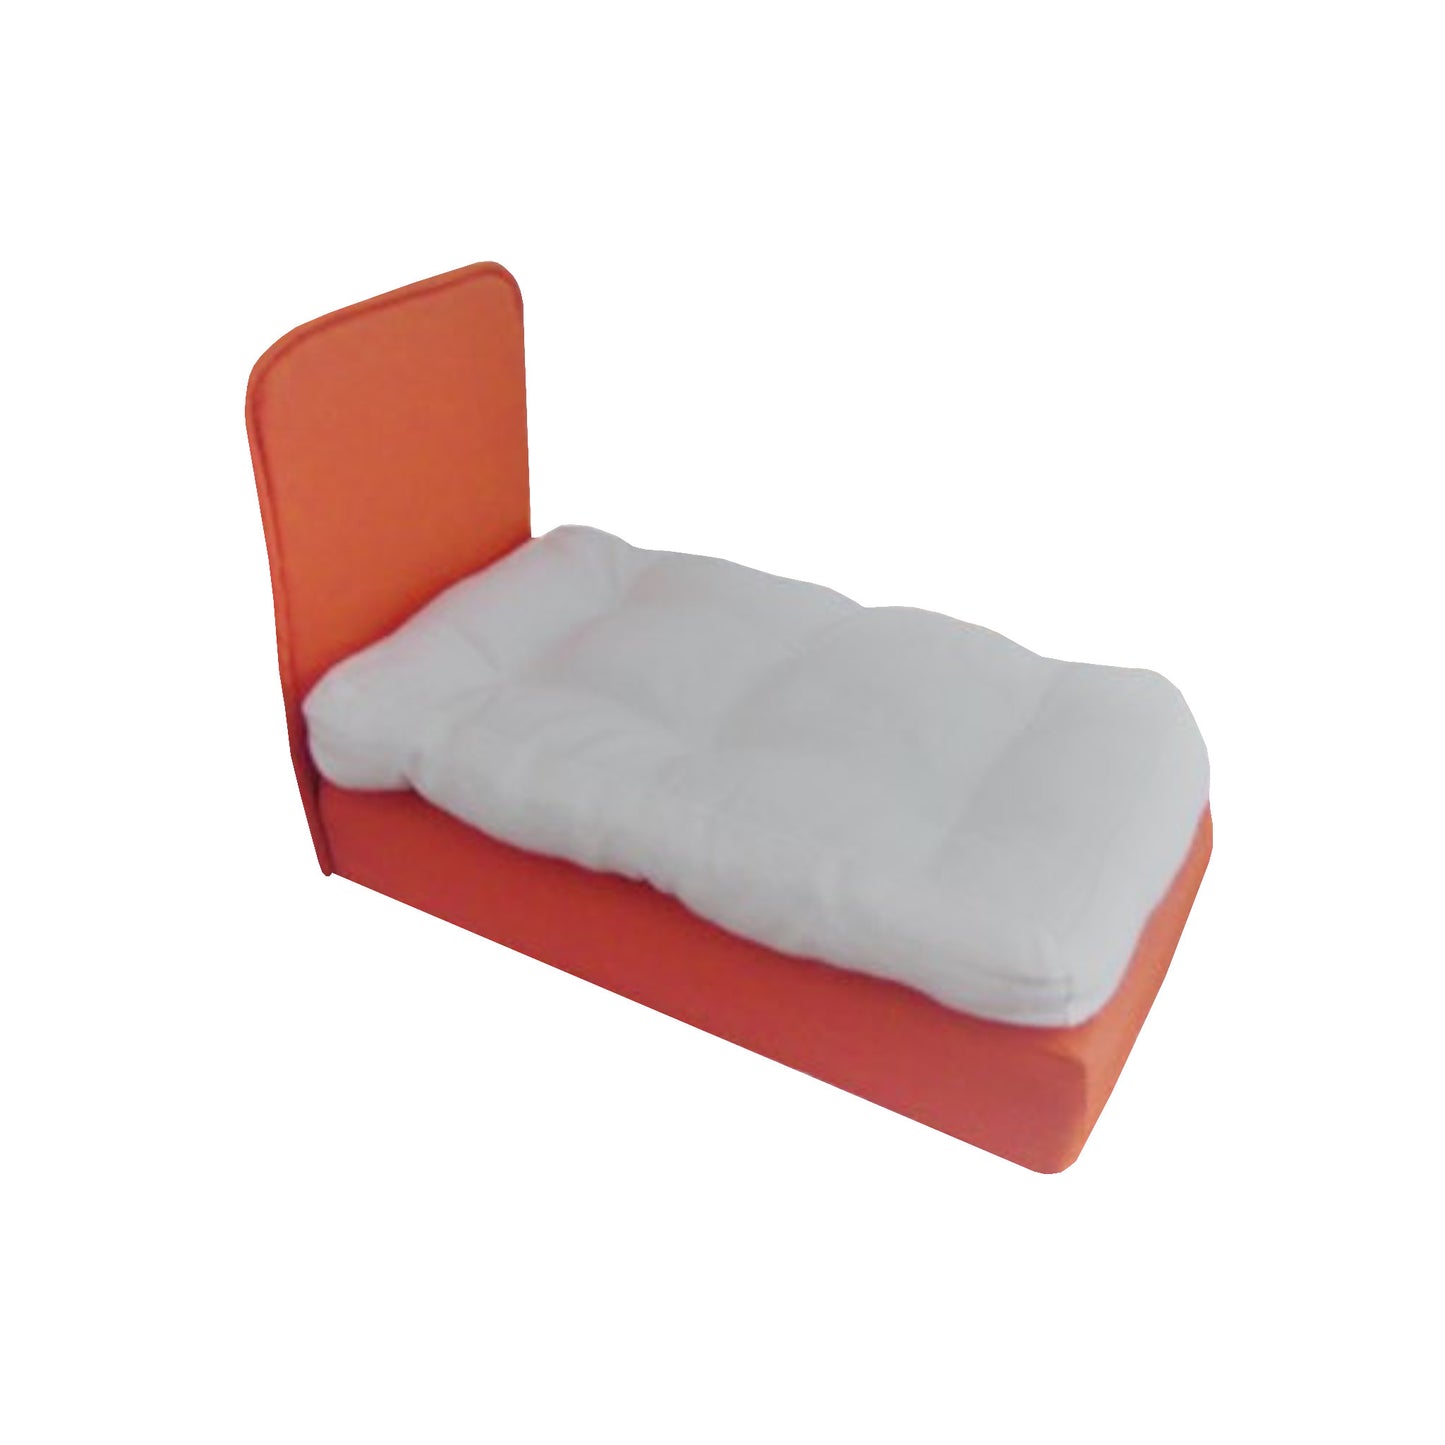 Upholstered Orange Doll Bed for 6.5-inch dolls